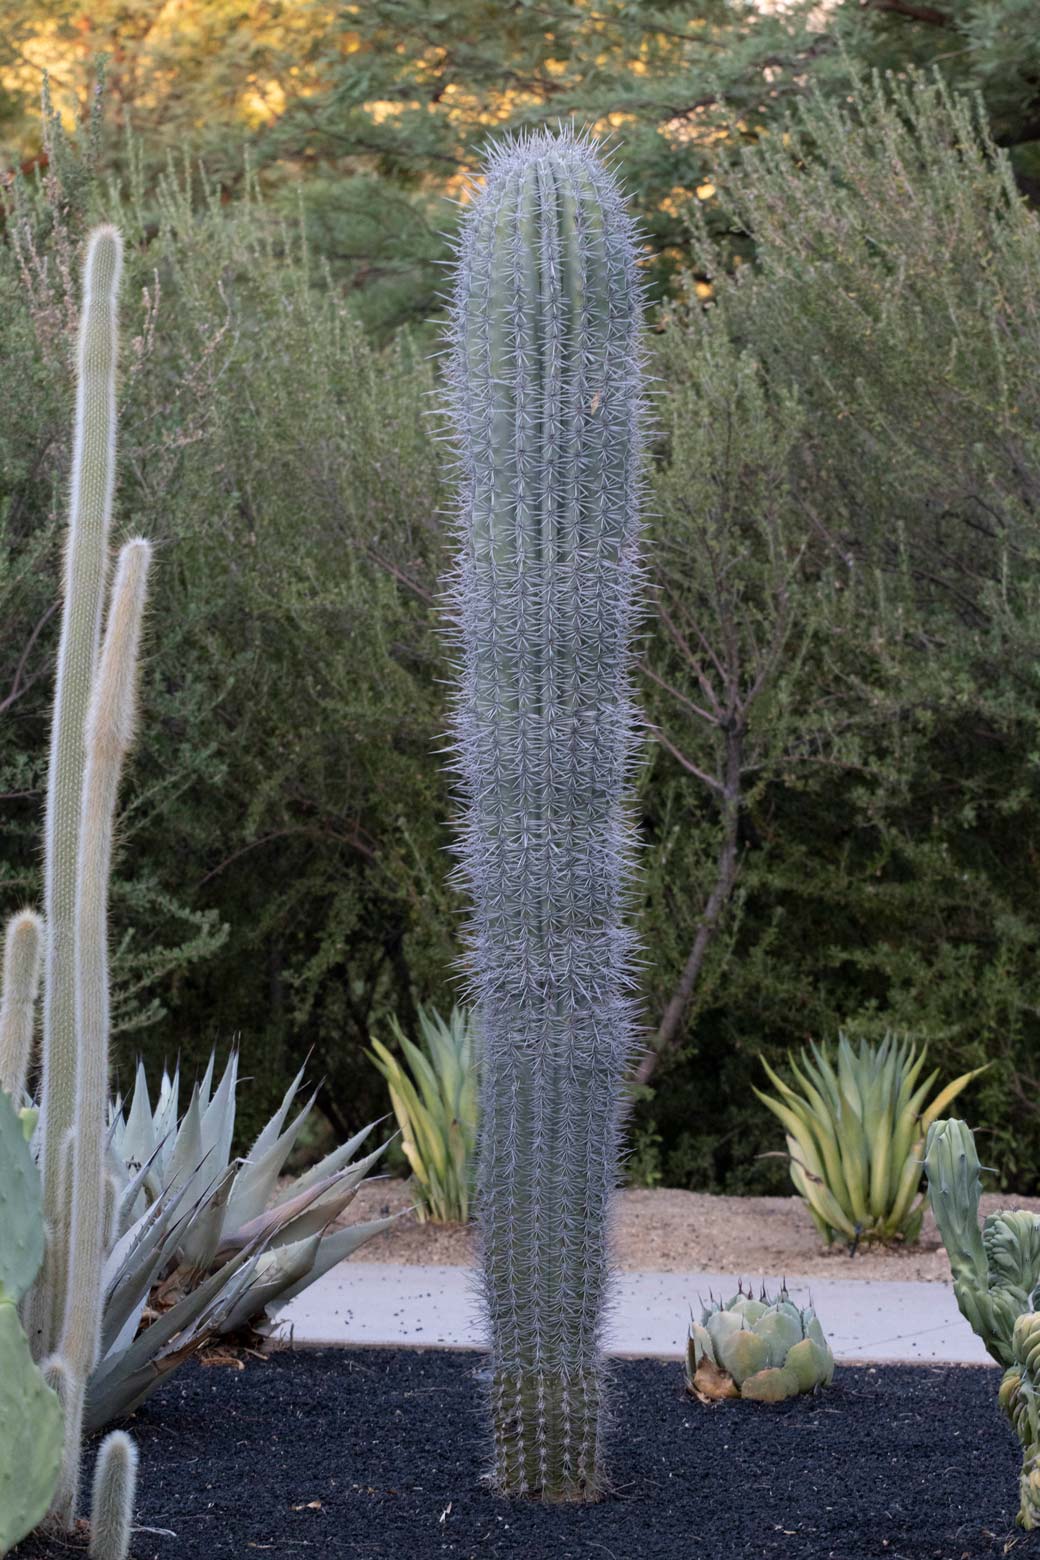 A Cardon cactus in the specimen bed.